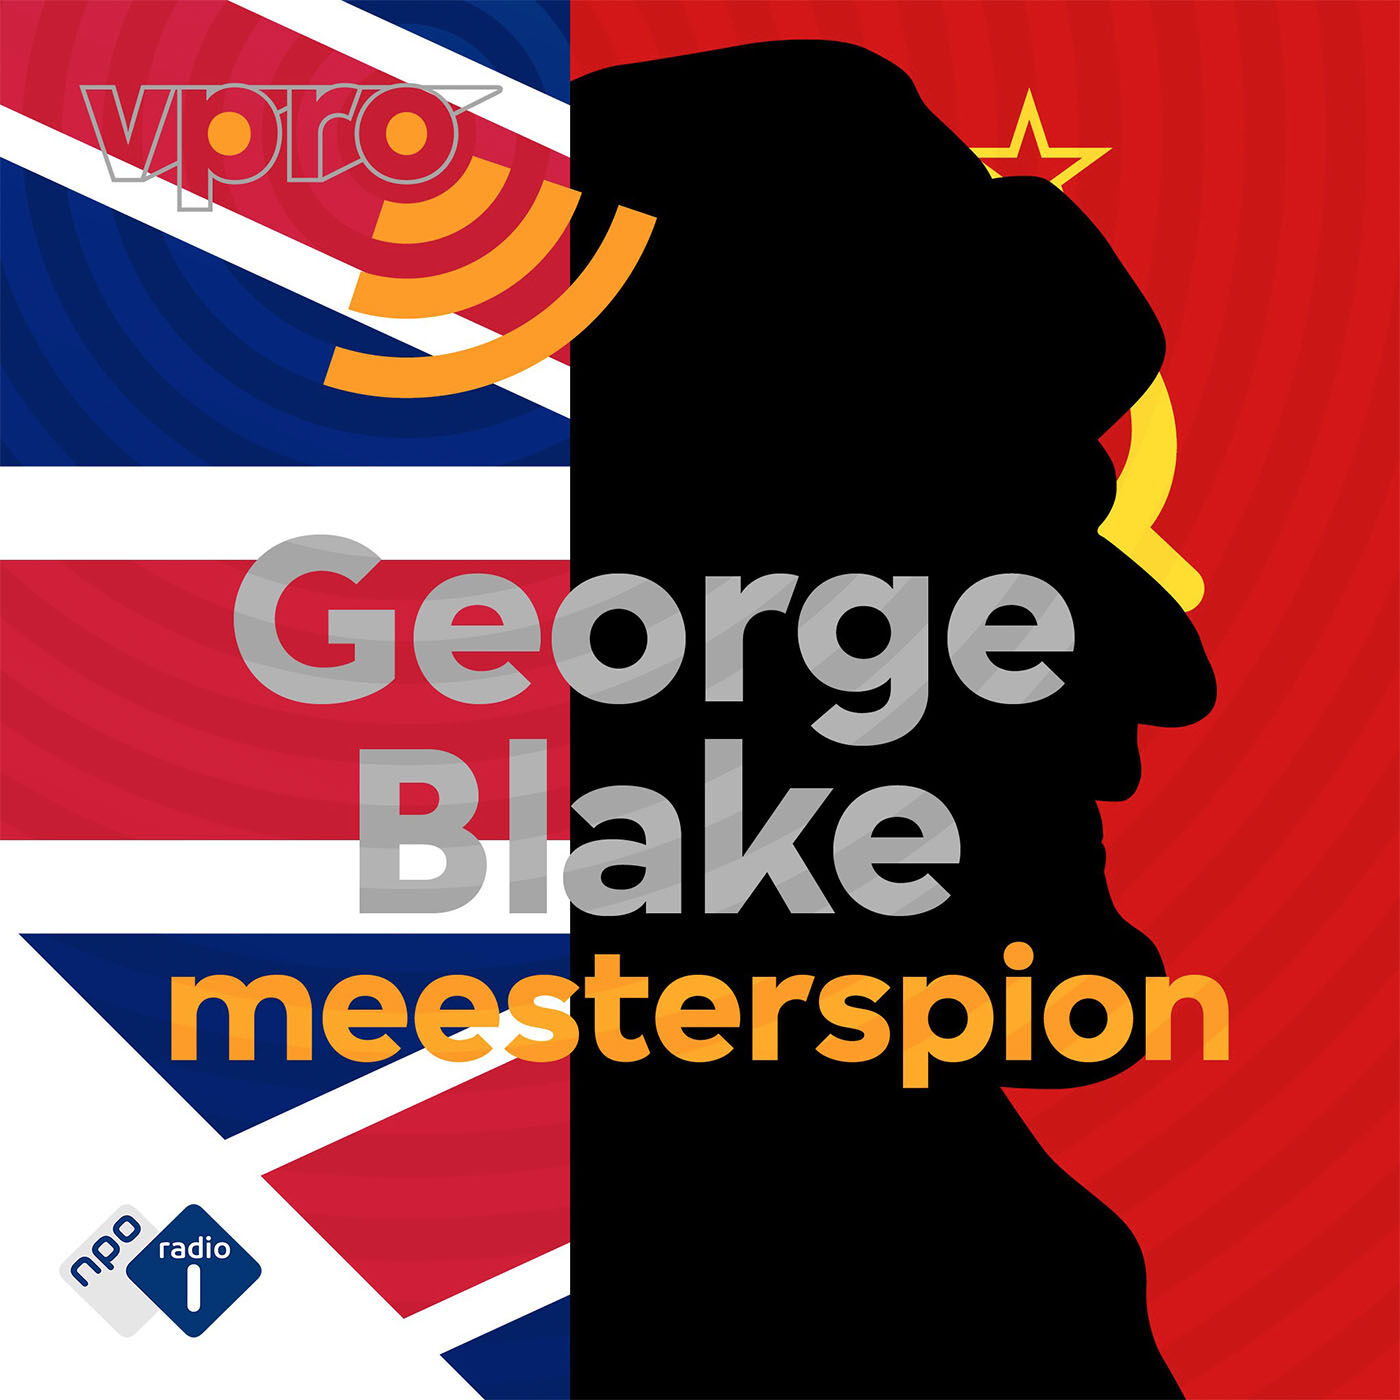 George Blake: meesterspion podcast show image